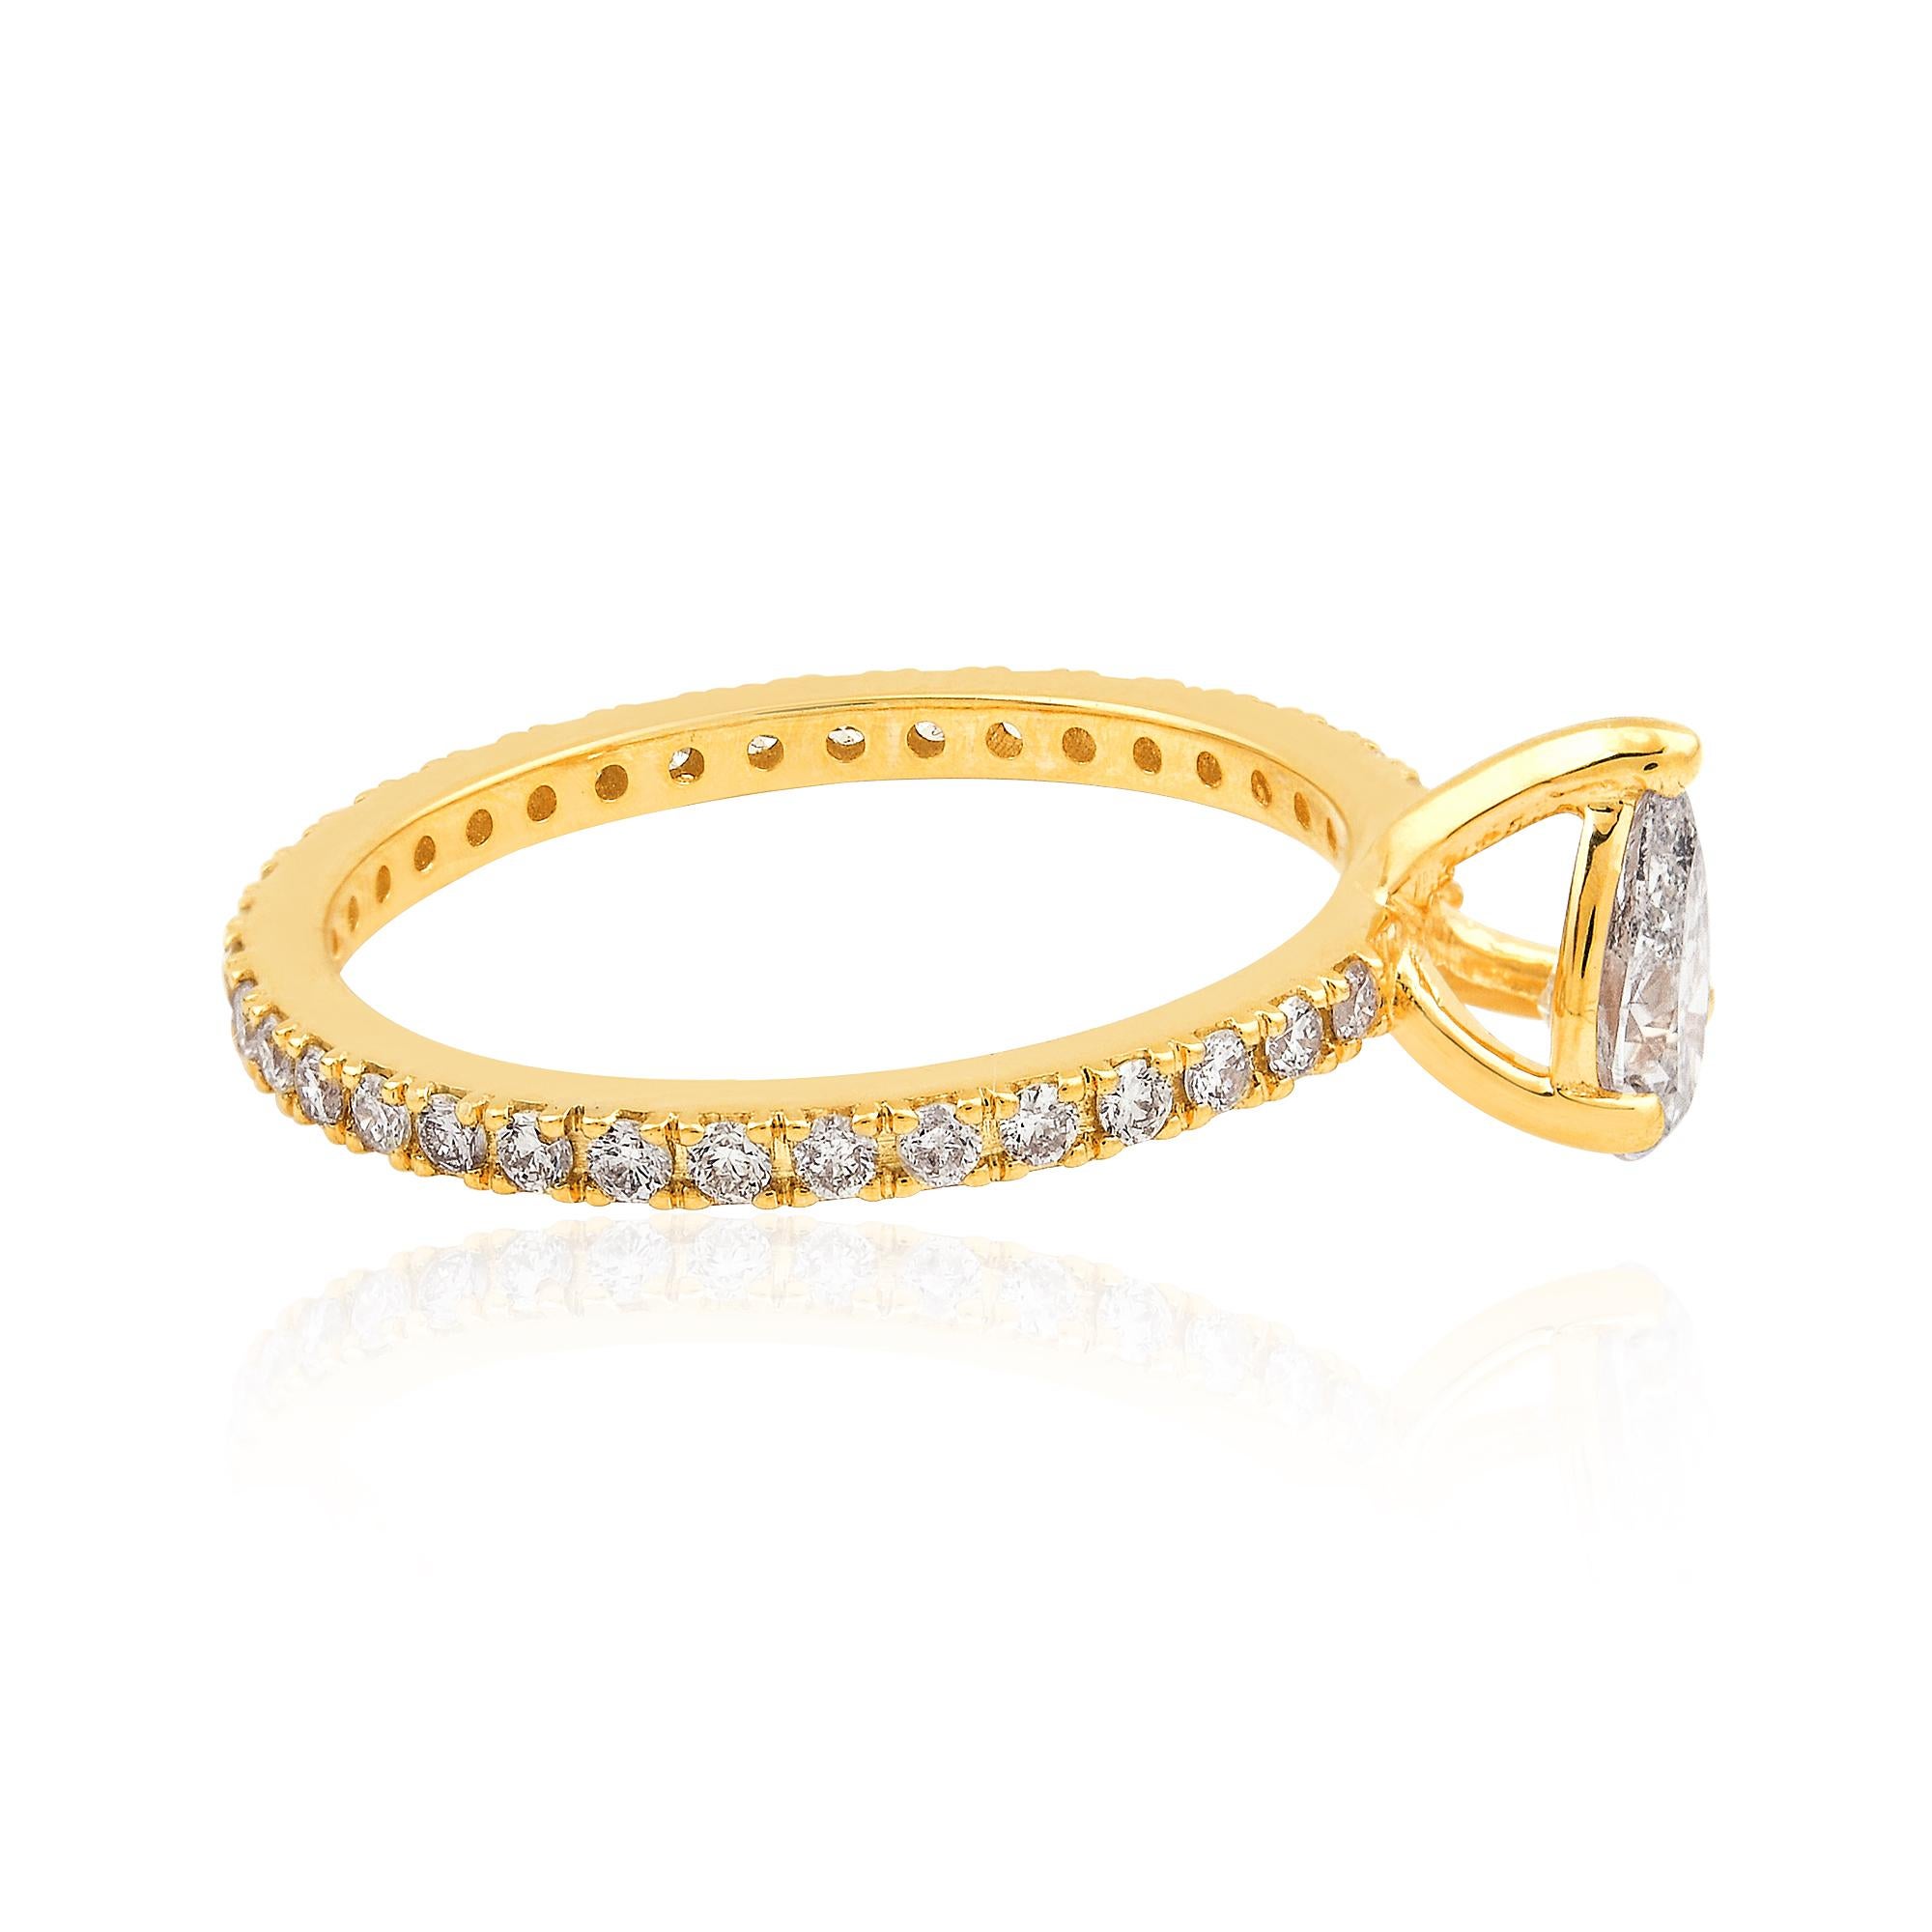 For Sale:  0.91 Carat Pear Diamond Band Ring Solid 14 Karat Yellow Gold Handmade Jewelry 2